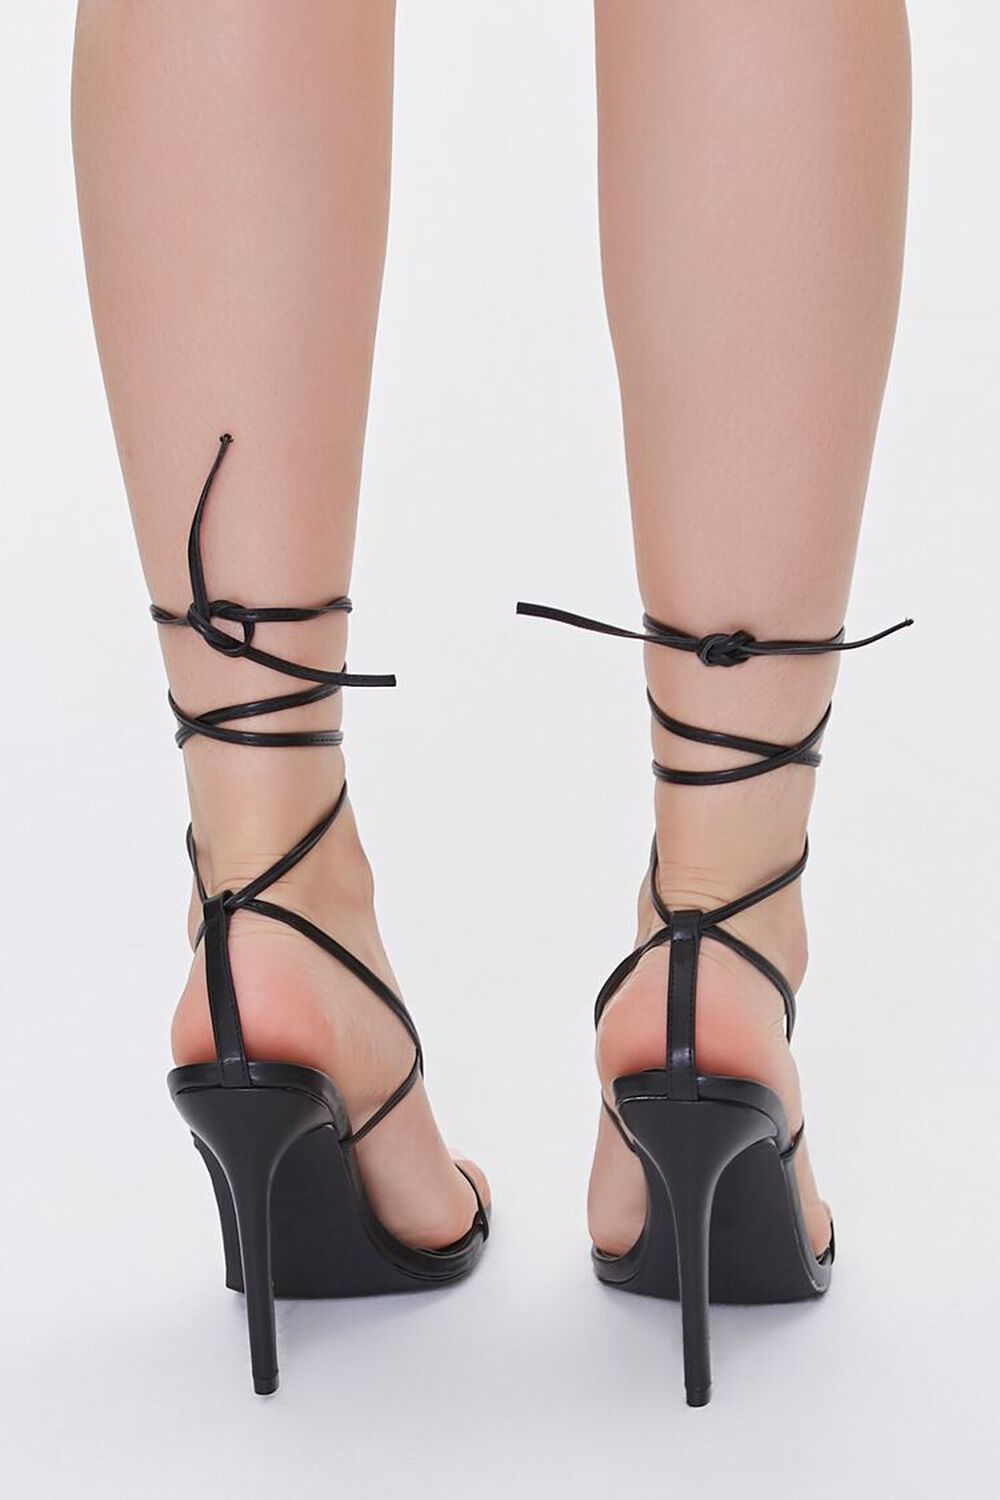 BLACK Strappy Toe-Thong Stiletto Heels, image 3